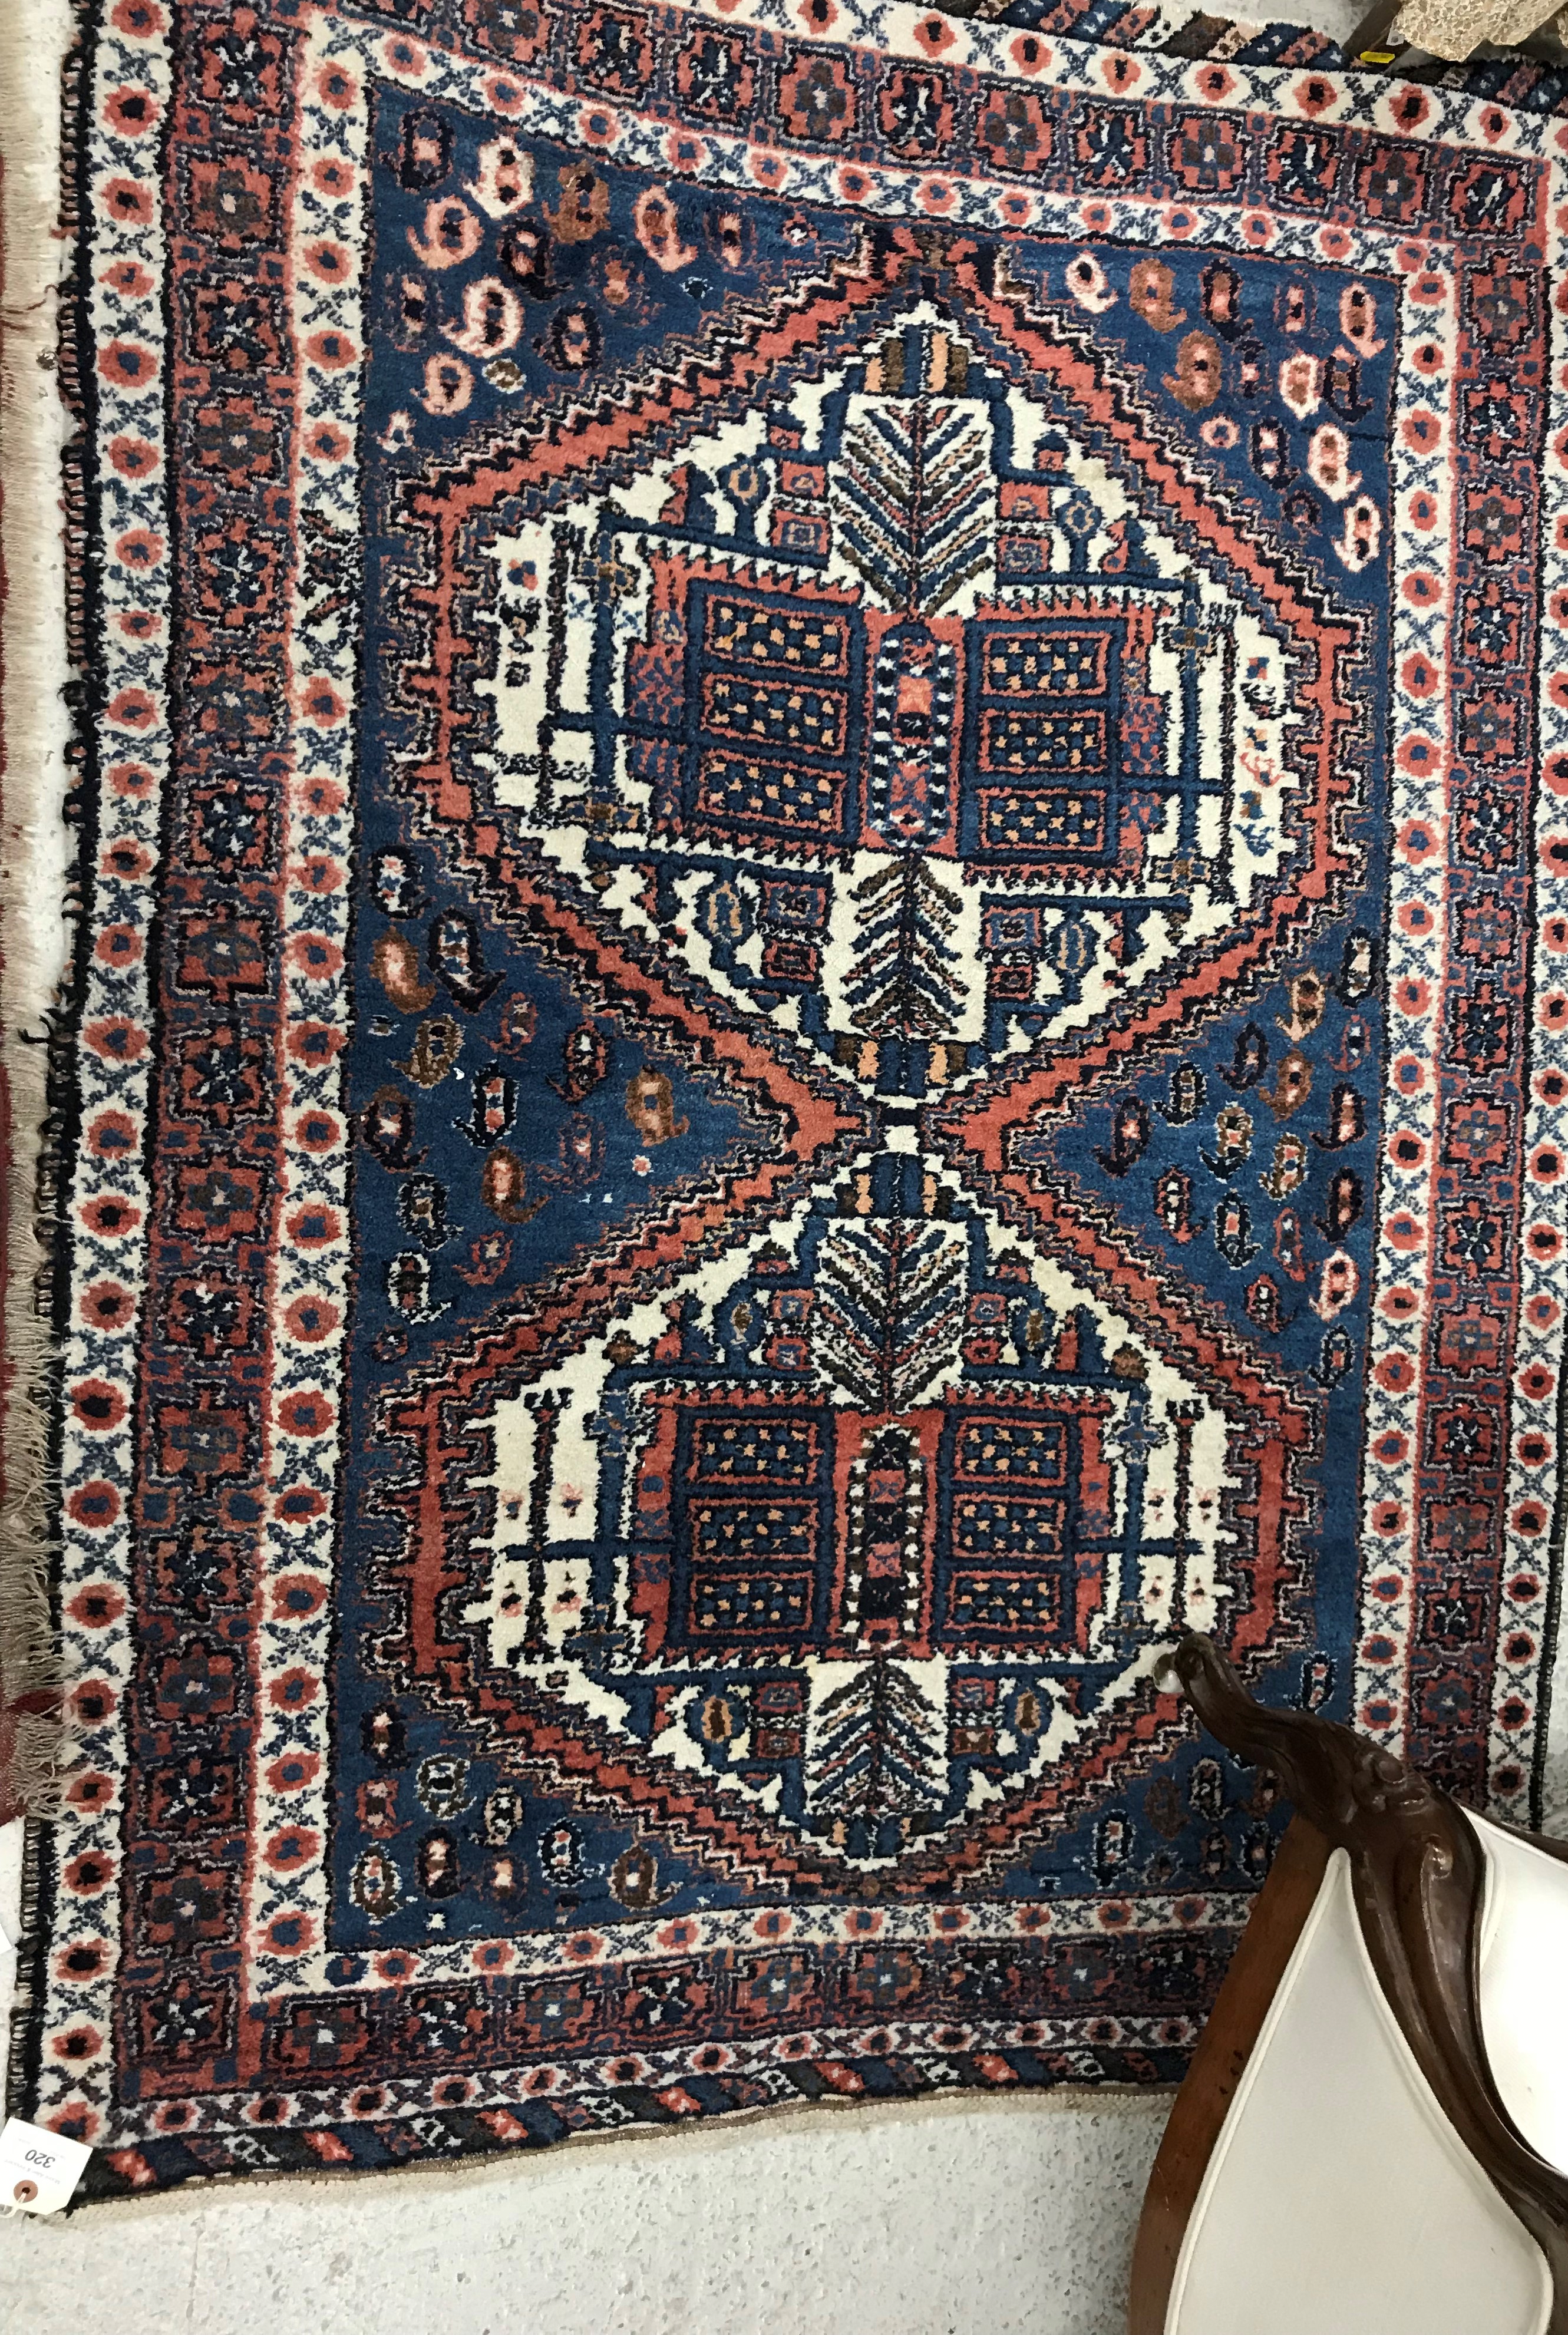 An Afshar rug, the central panel set wit